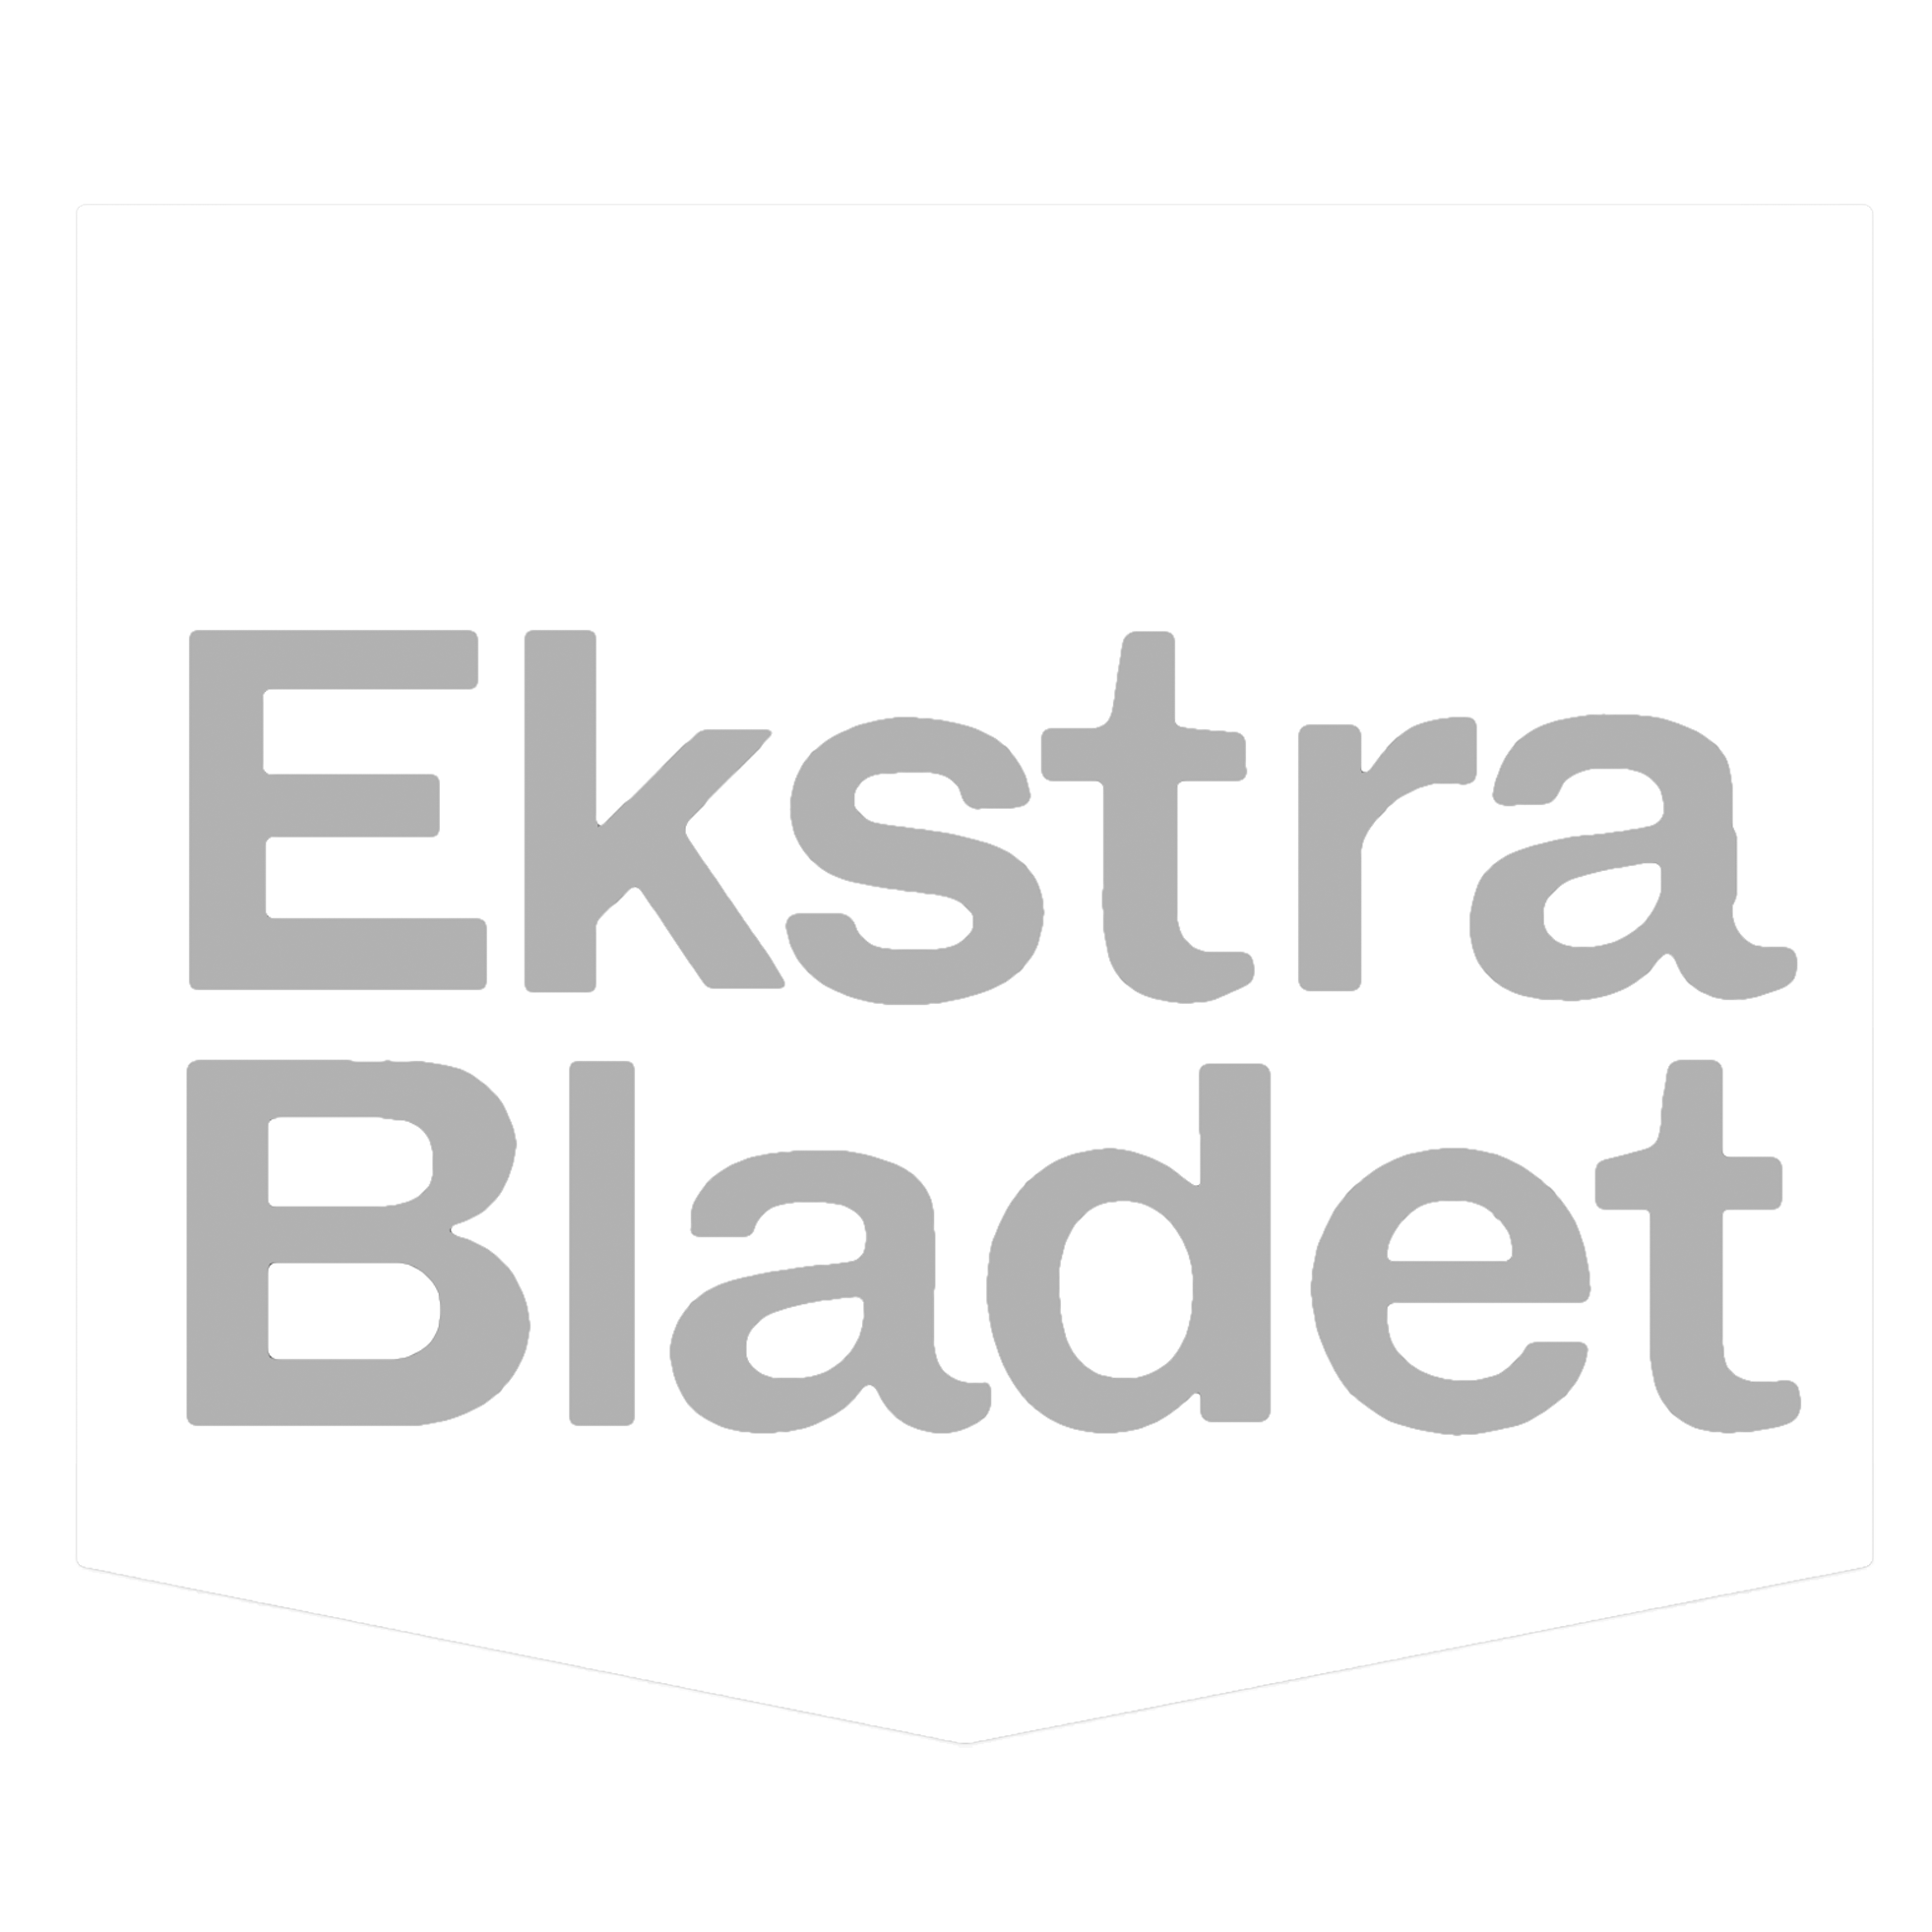 EB-logo